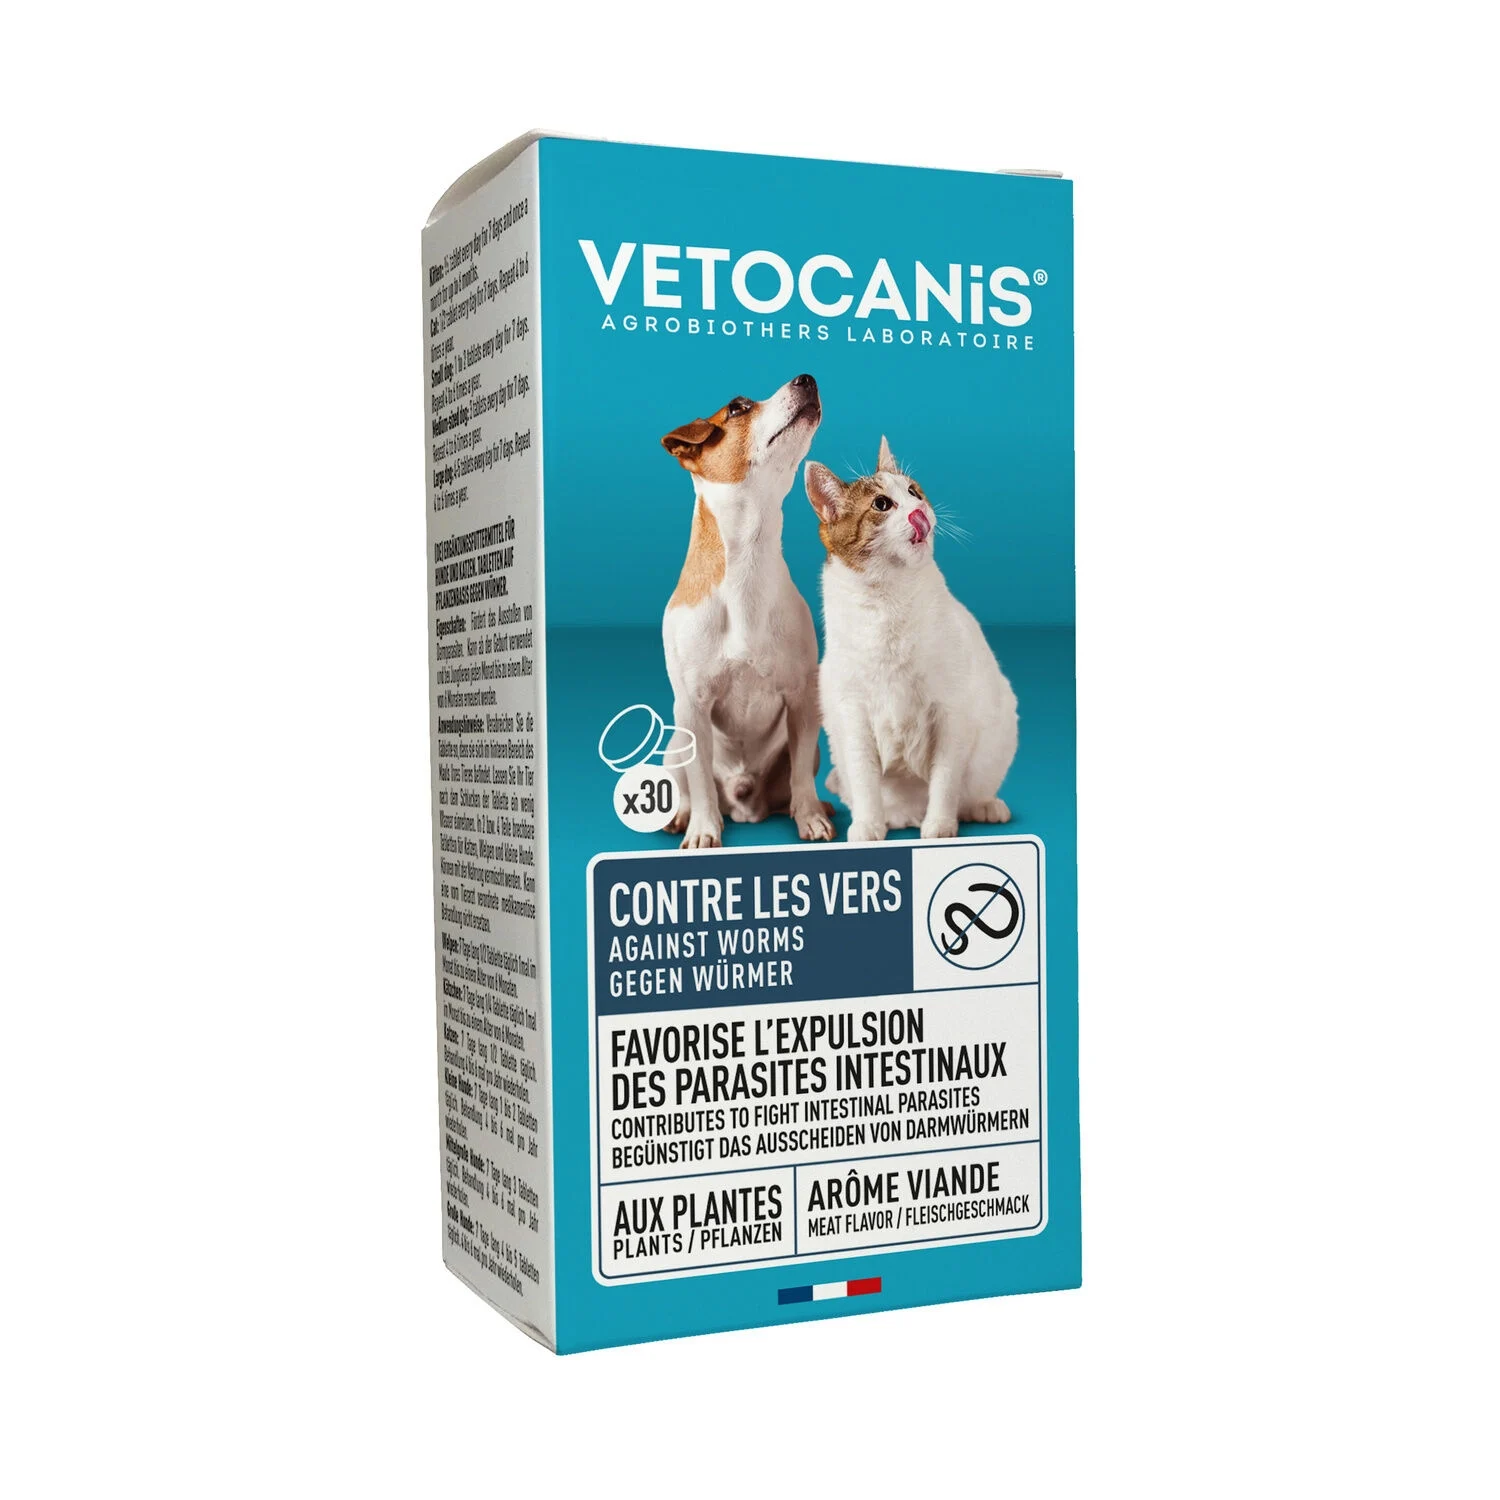 Canifuxe Tablet, Purga Para Perros Y Gatos Contra Lombrices - Vetocanis